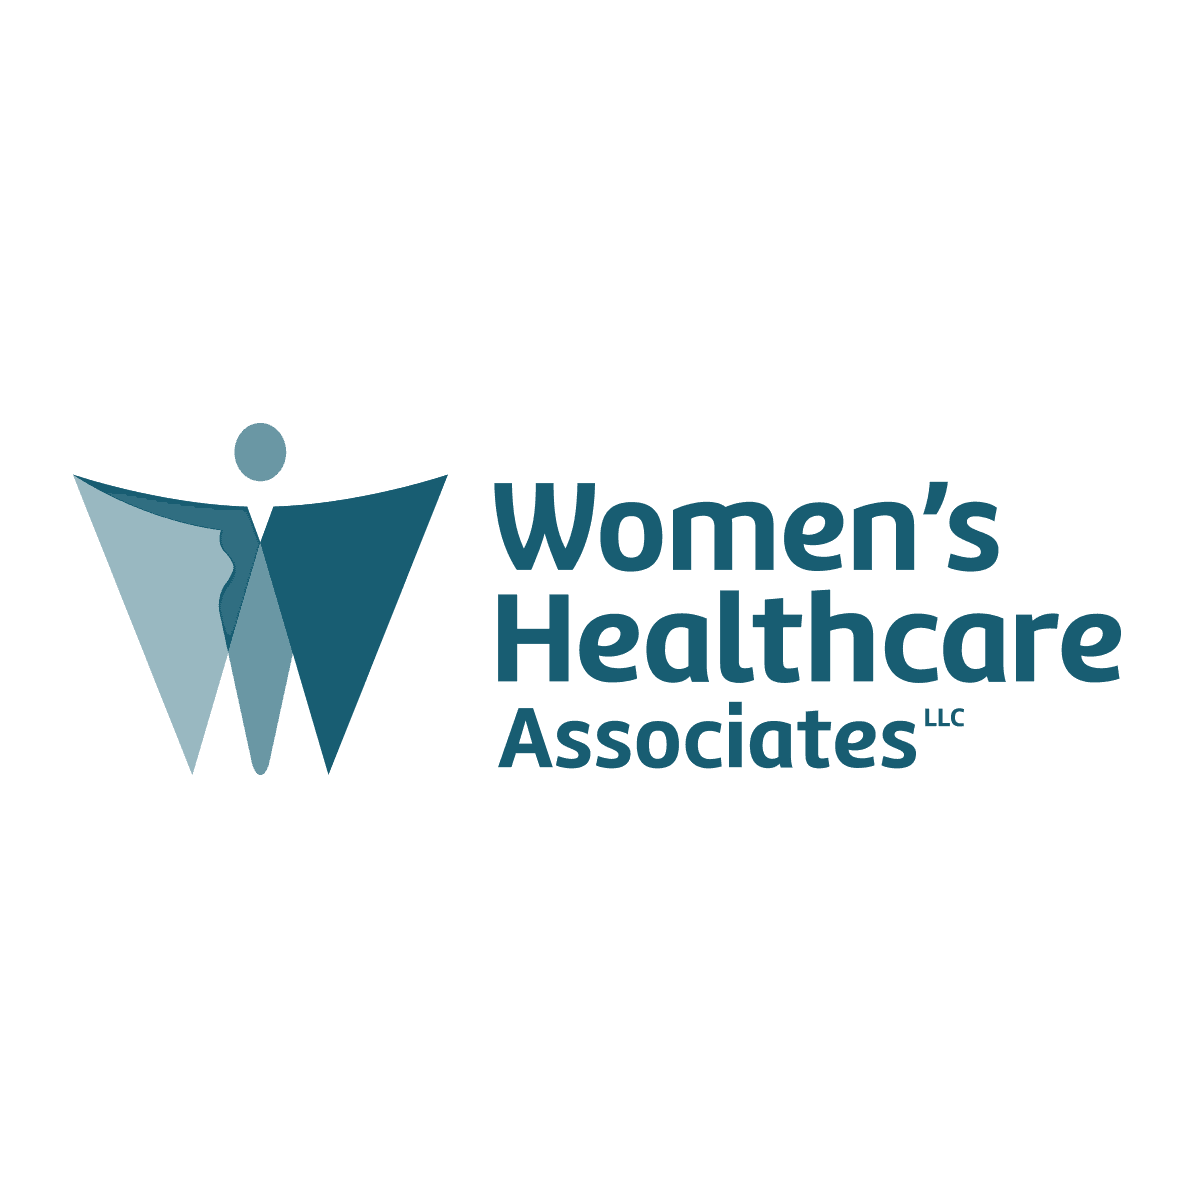 Women’s Healthcare Associates